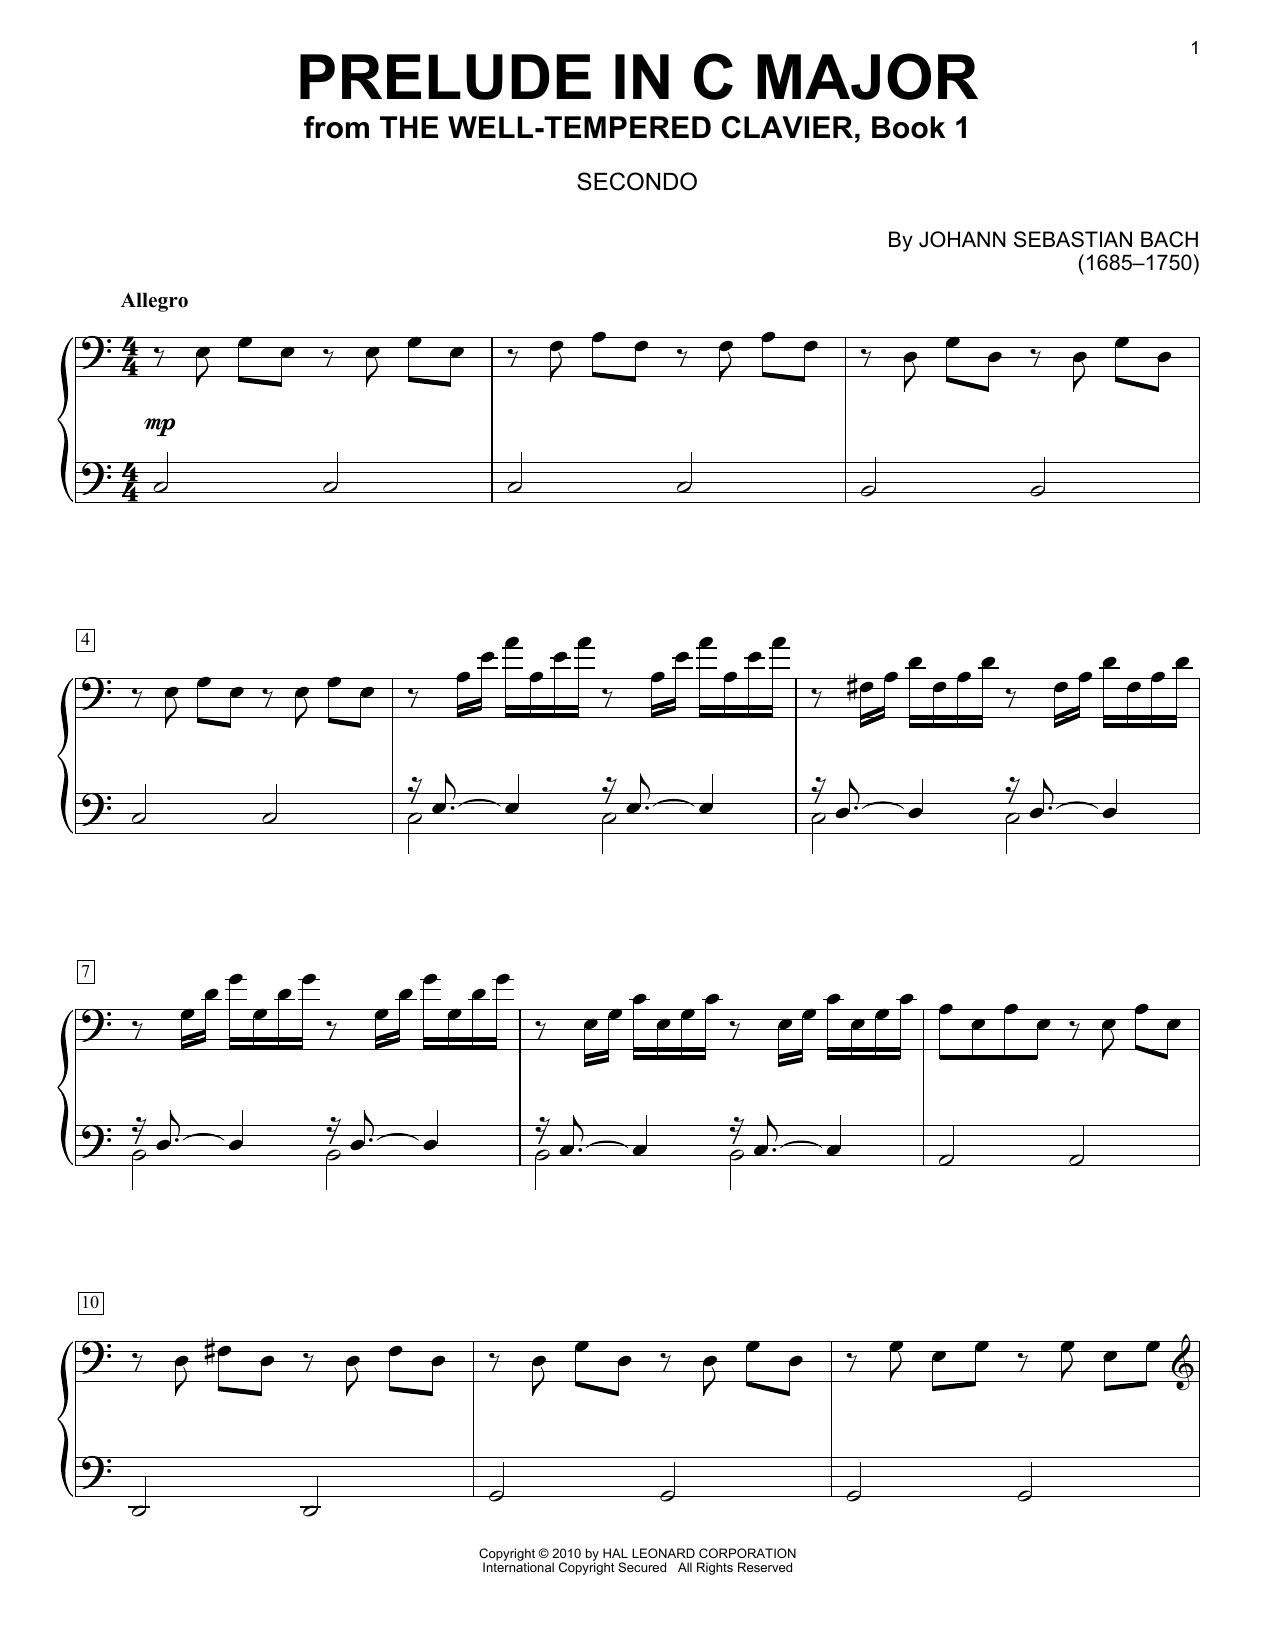 Johann Sebastian Bach Prelude in C Major Sheet Music Notes & Chords for Guitar Tab - Download or Print PDF